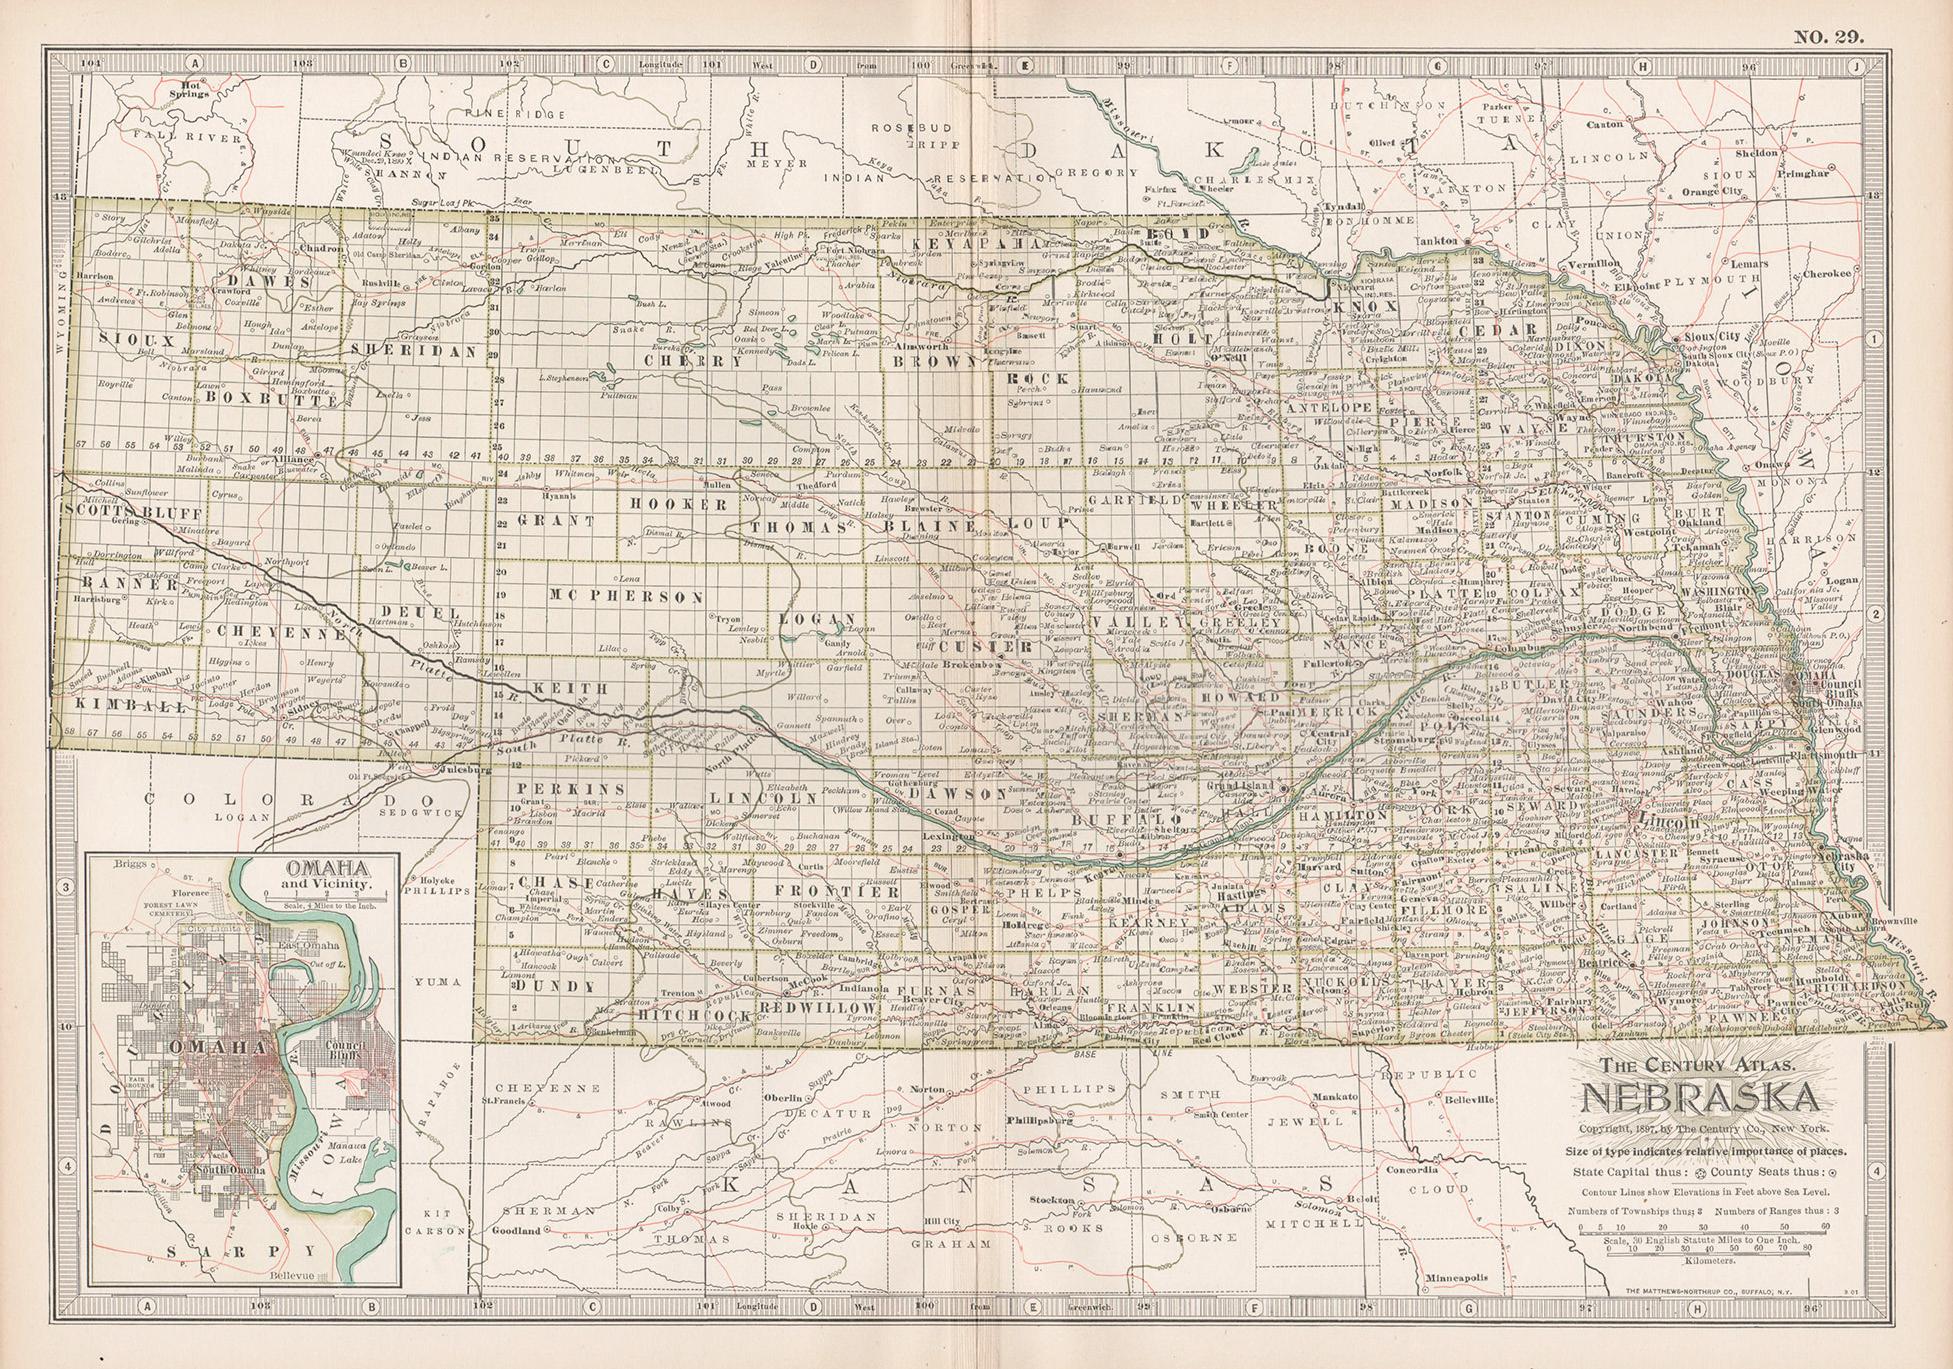 Unknown Print - Nebraska. USA. Century Atlas state antique vintage map